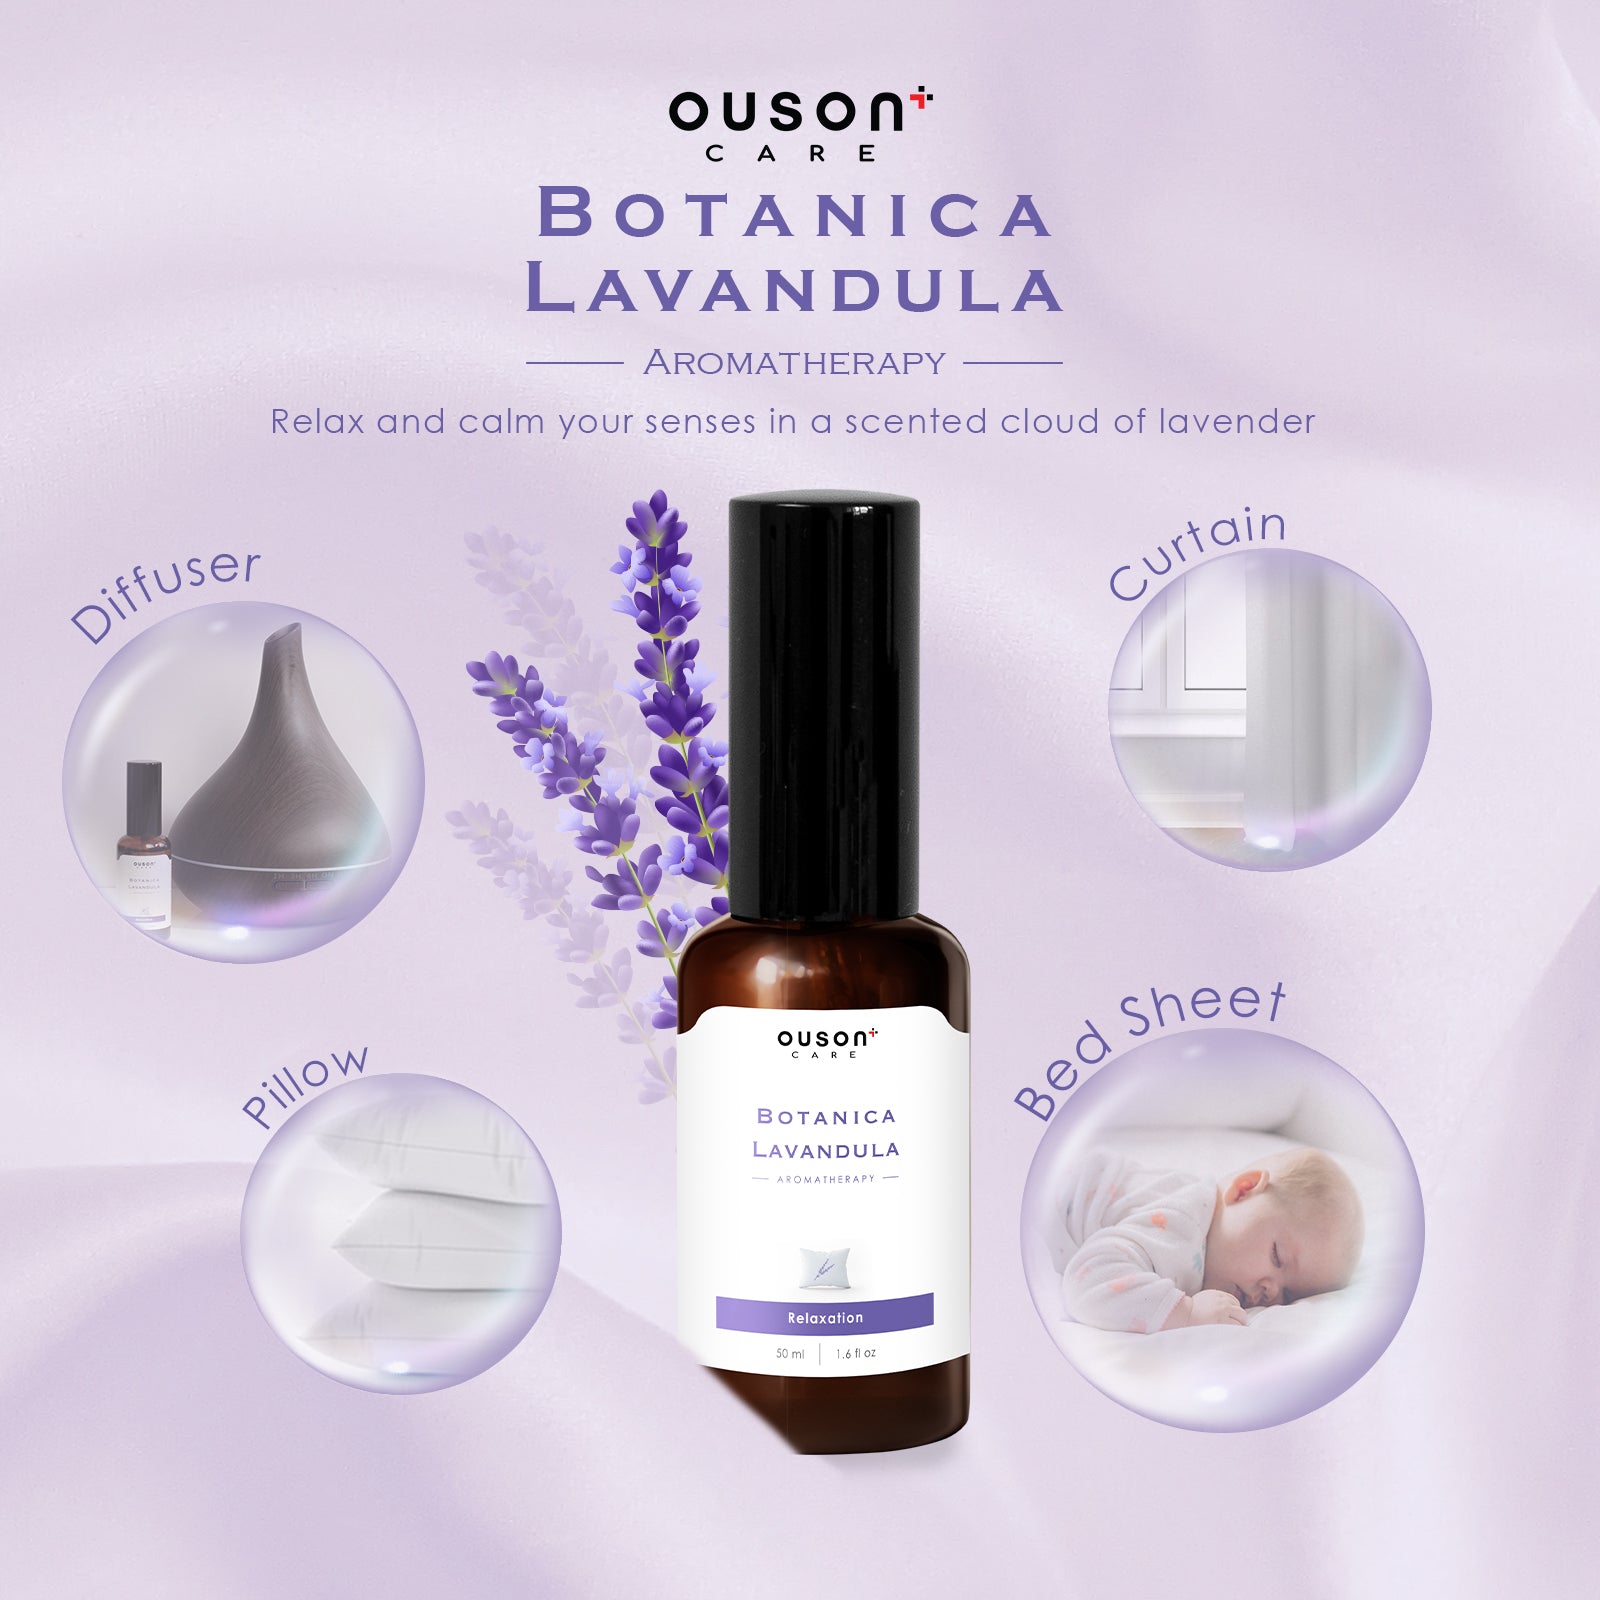 Ouson Botanica Lavandula Aromatherapy Spray 50ml